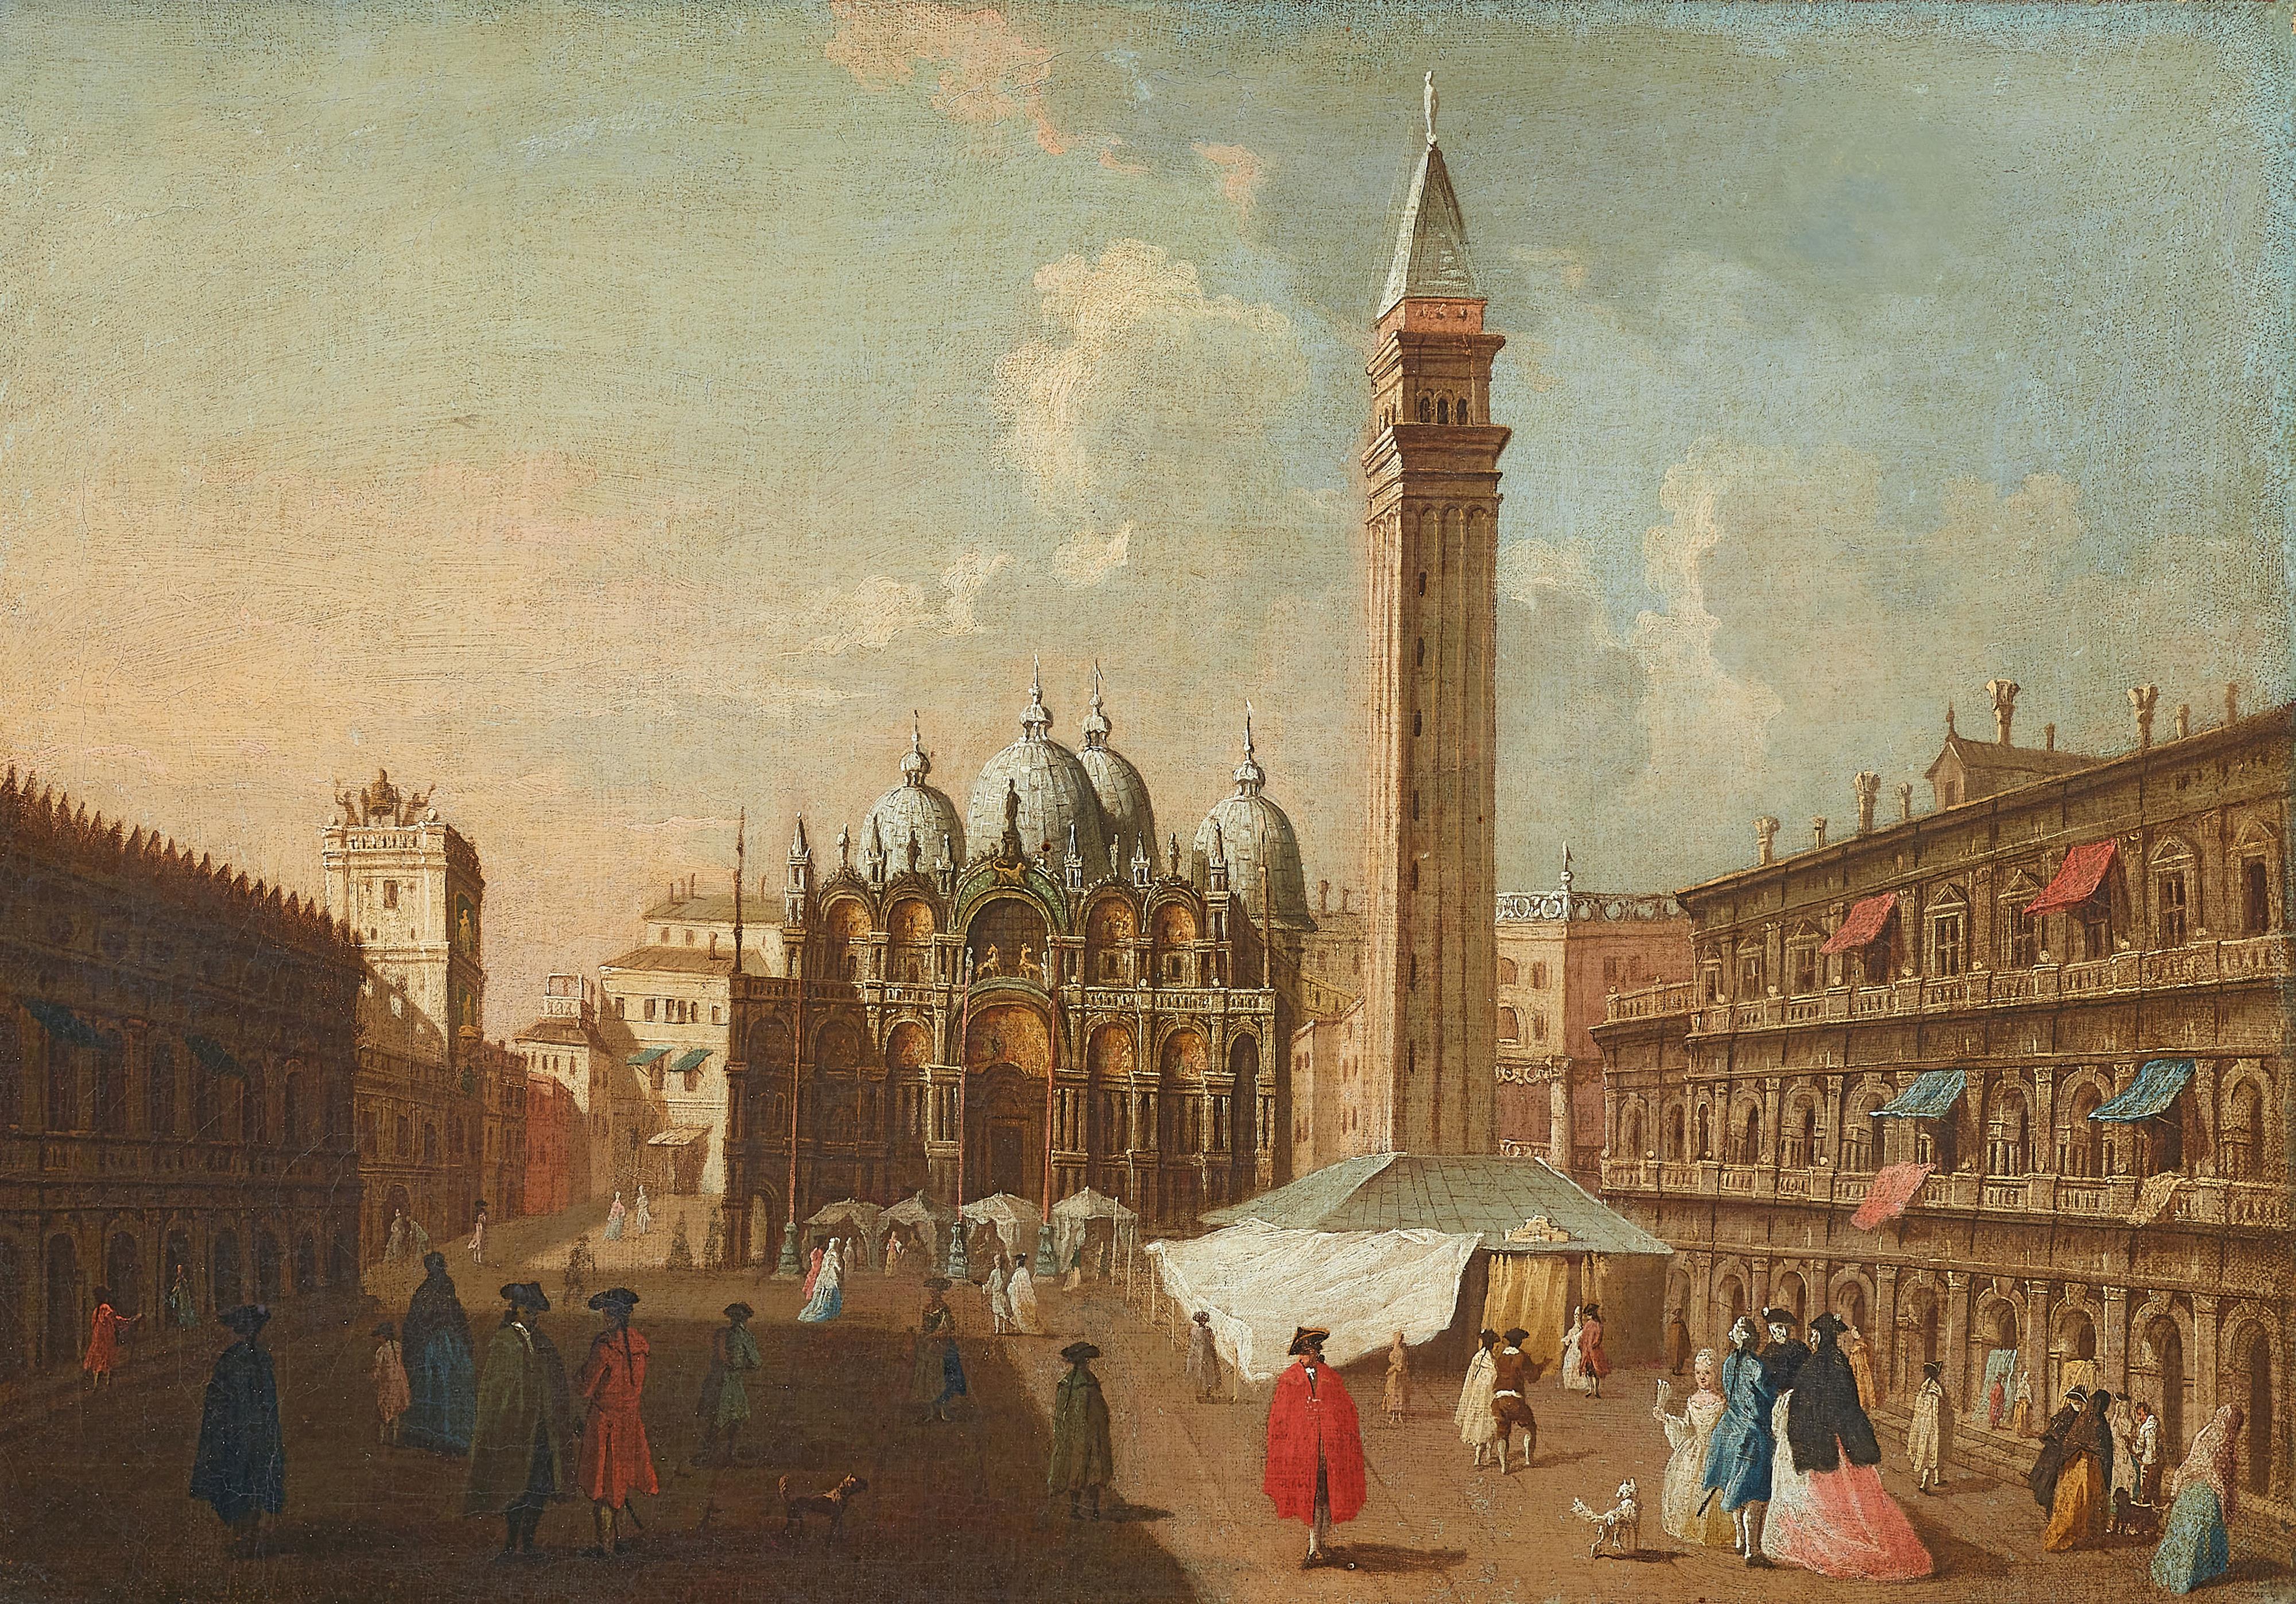 Venetian School around 1800 - St Mark's Square in Venice - image-1